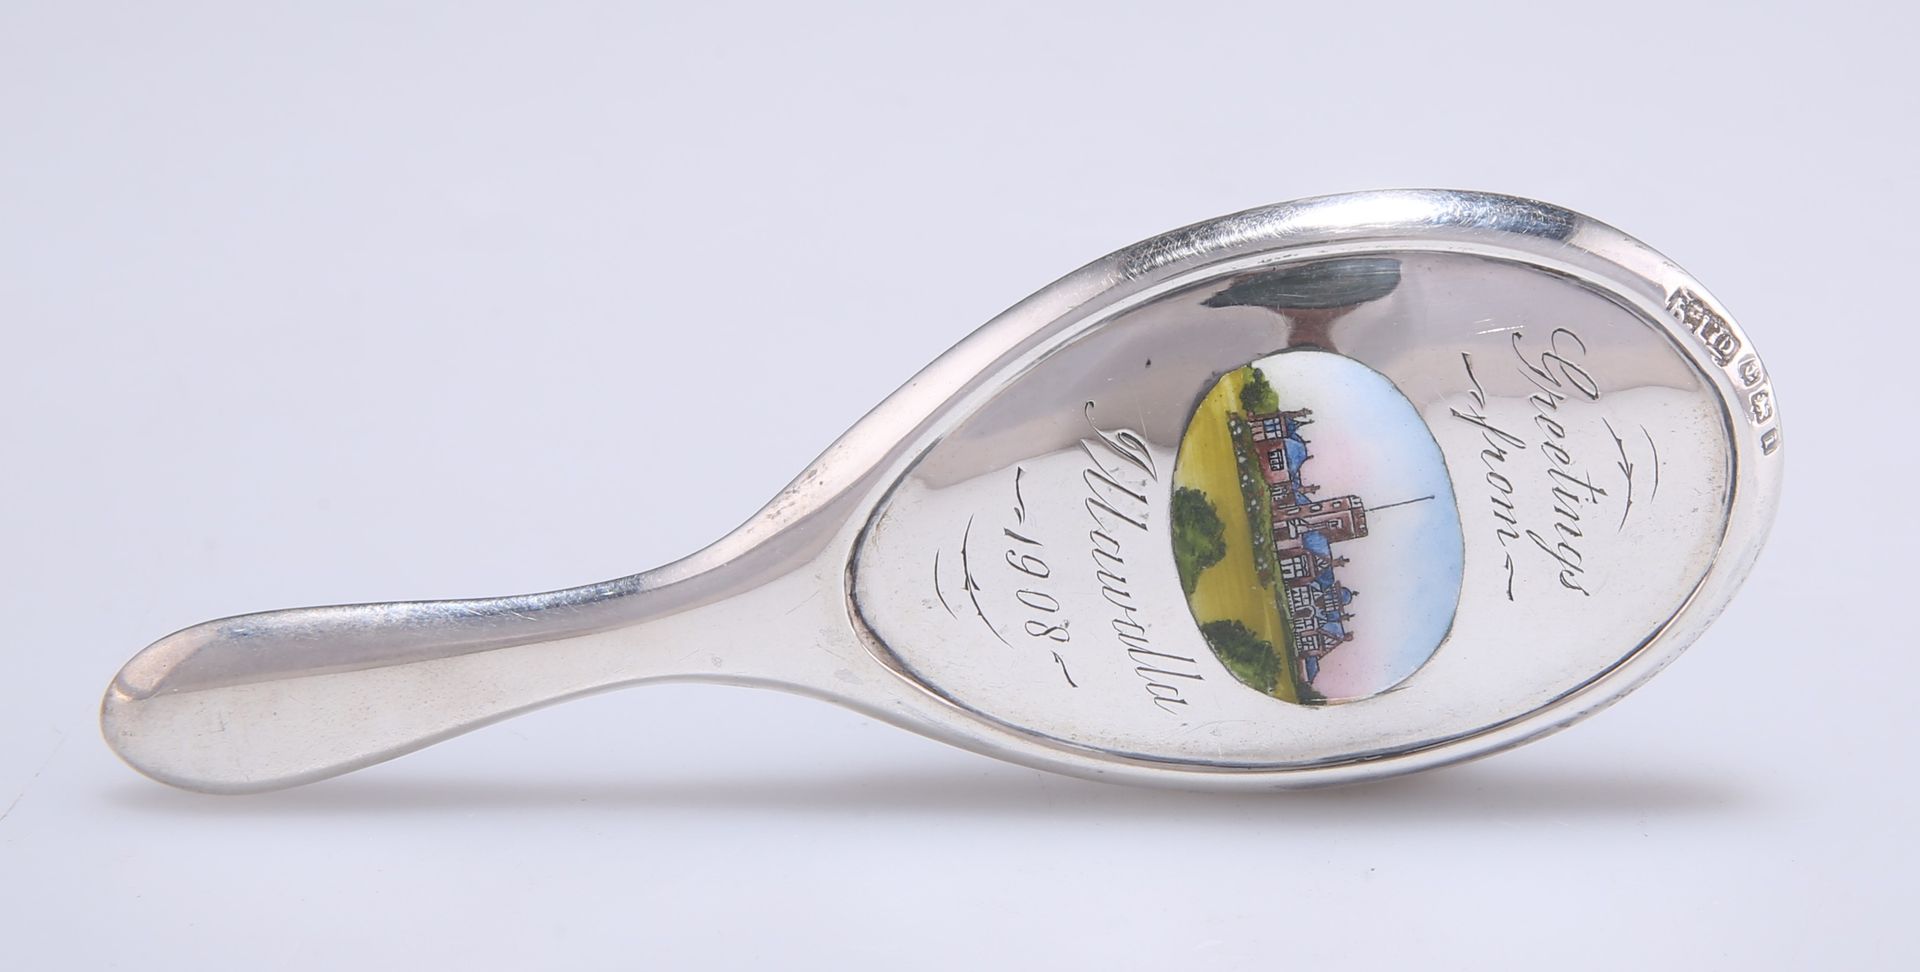 Null 爱德华银和珐琅小手镜，伯明翰，1908年，刻有 "来自伊拉瓦拉的问候1908"，珐琅上有爱德华时期兰开夏的历史财产的景色。10.5厘米长